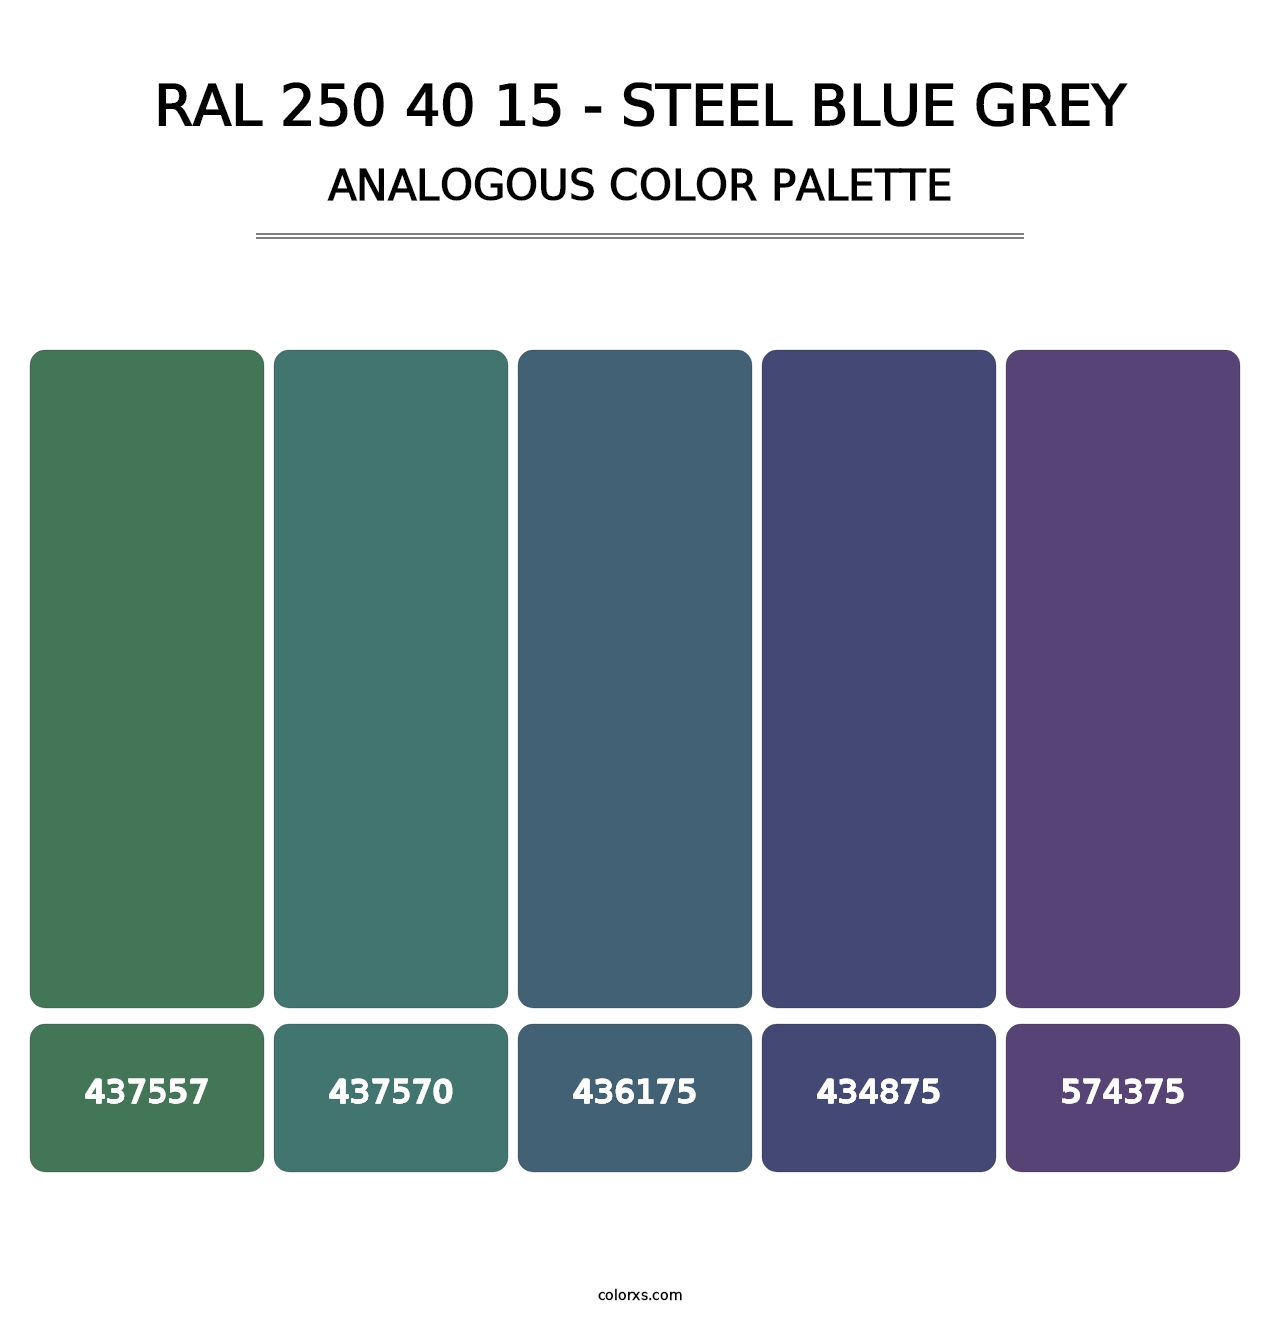 RAL 250 40 15 - Steel Blue Grey - Analogous Color Palette